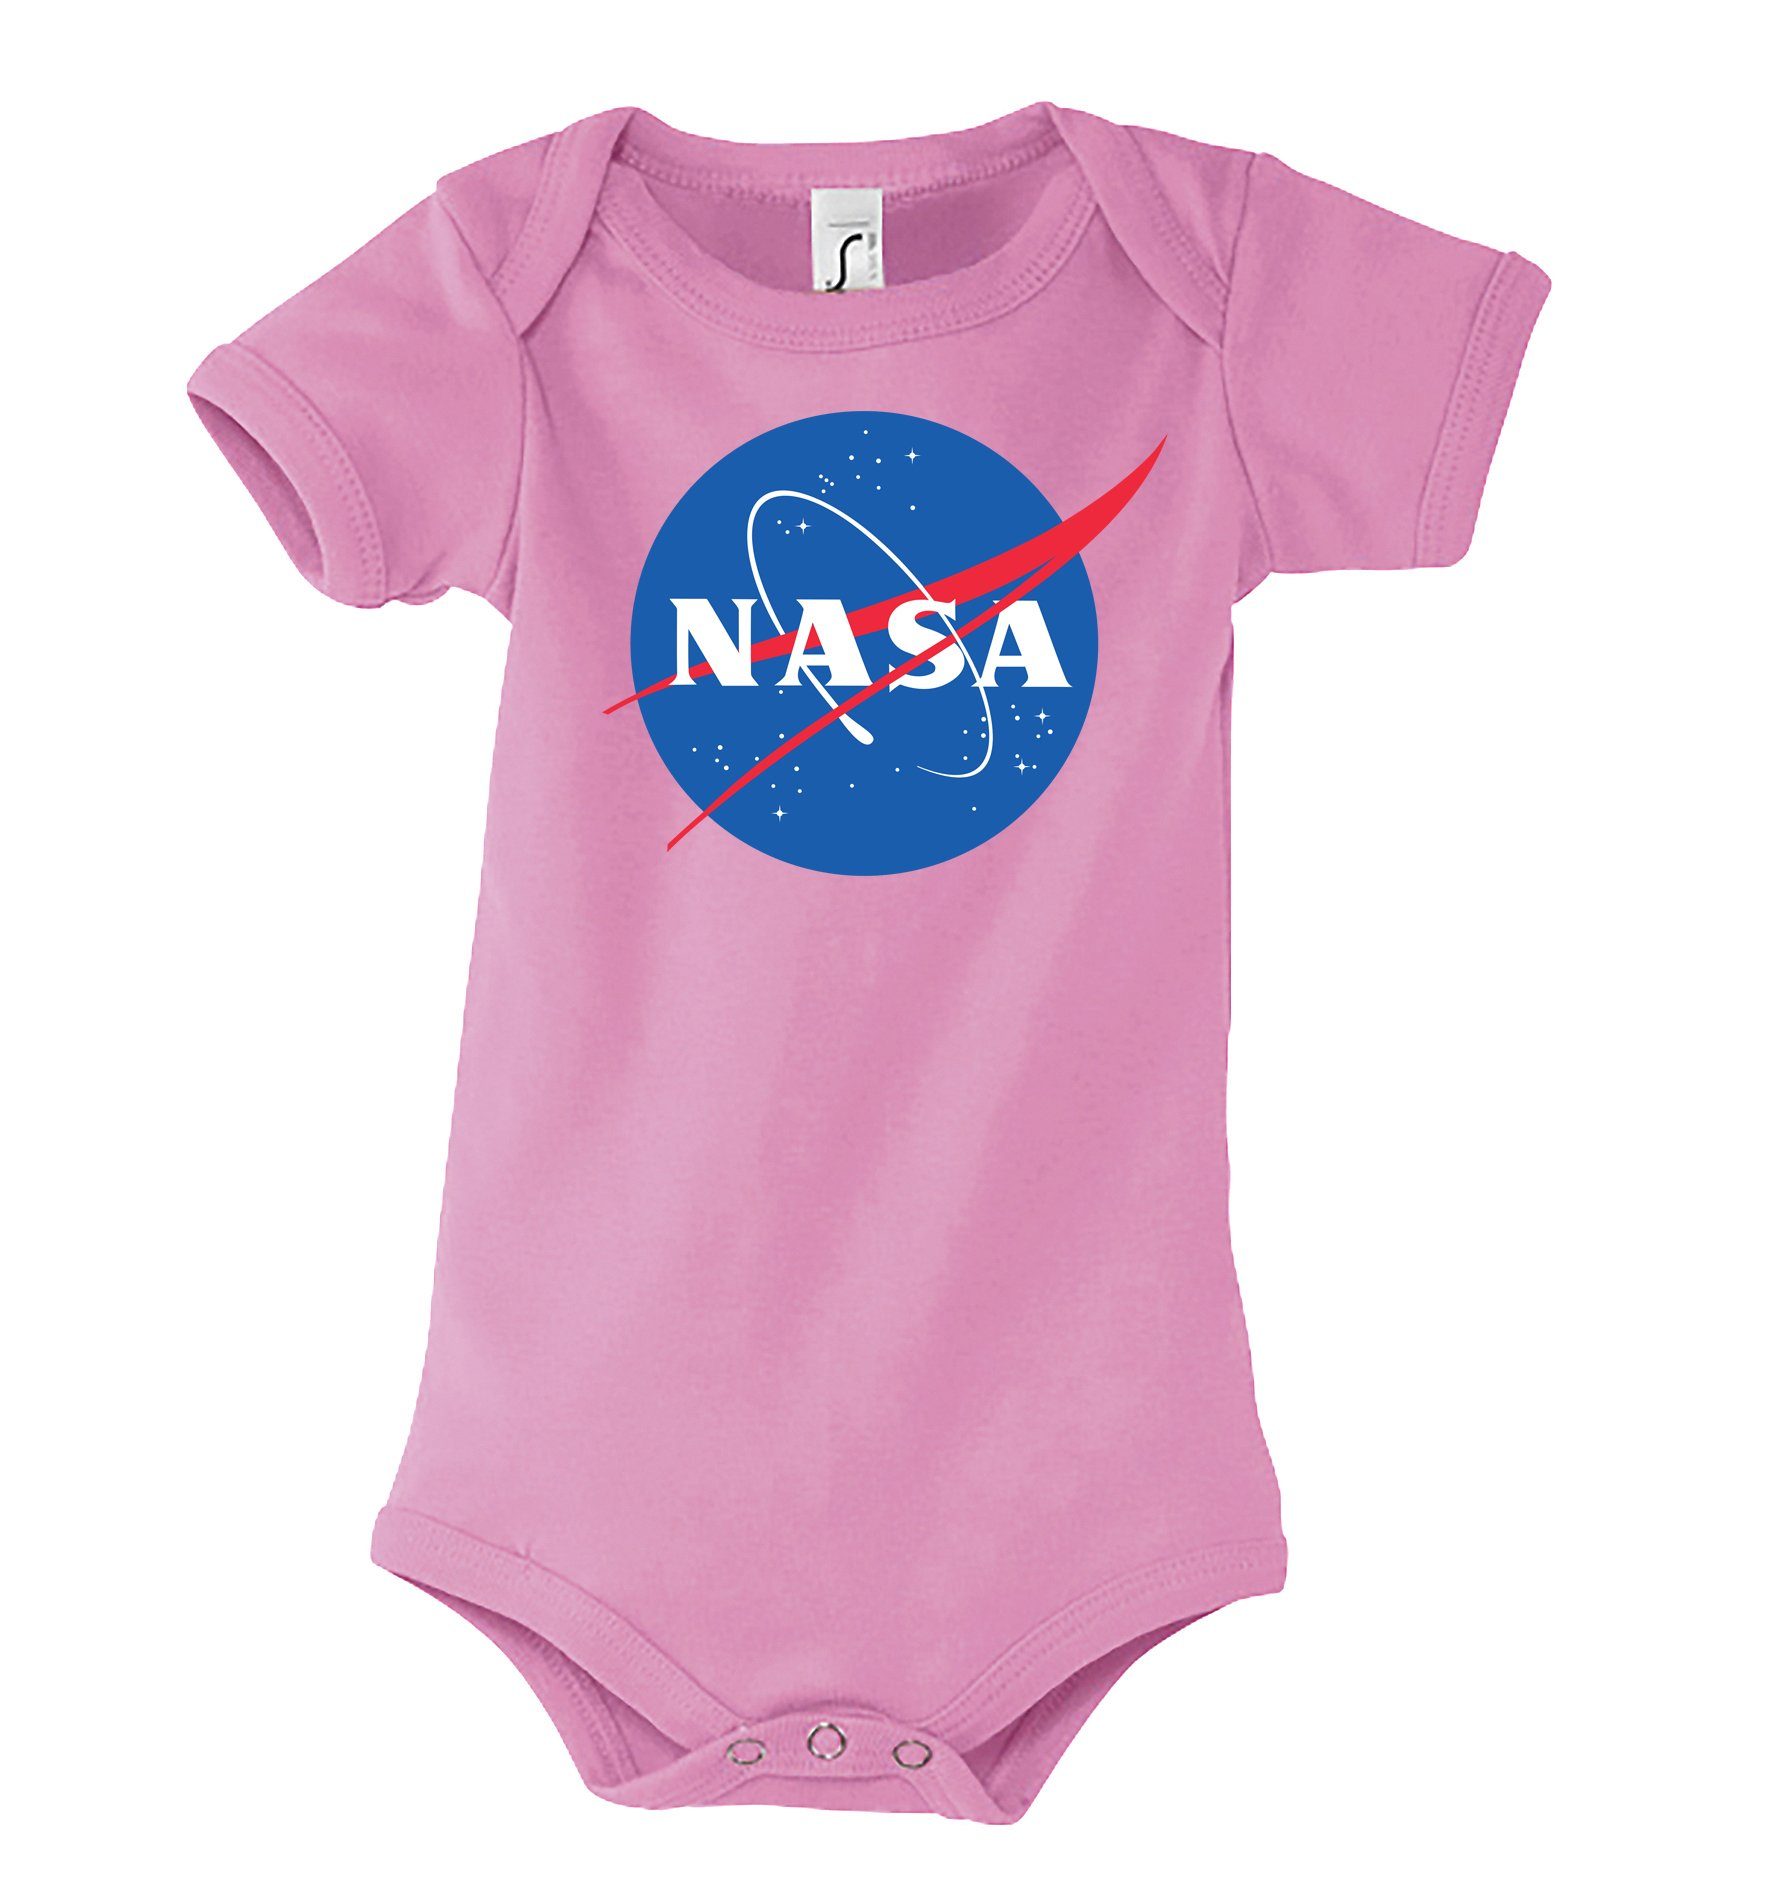 Youth Designz Kurzarmbody Baby Body Strampler NASA mit niedlichem Frontprint Rosa